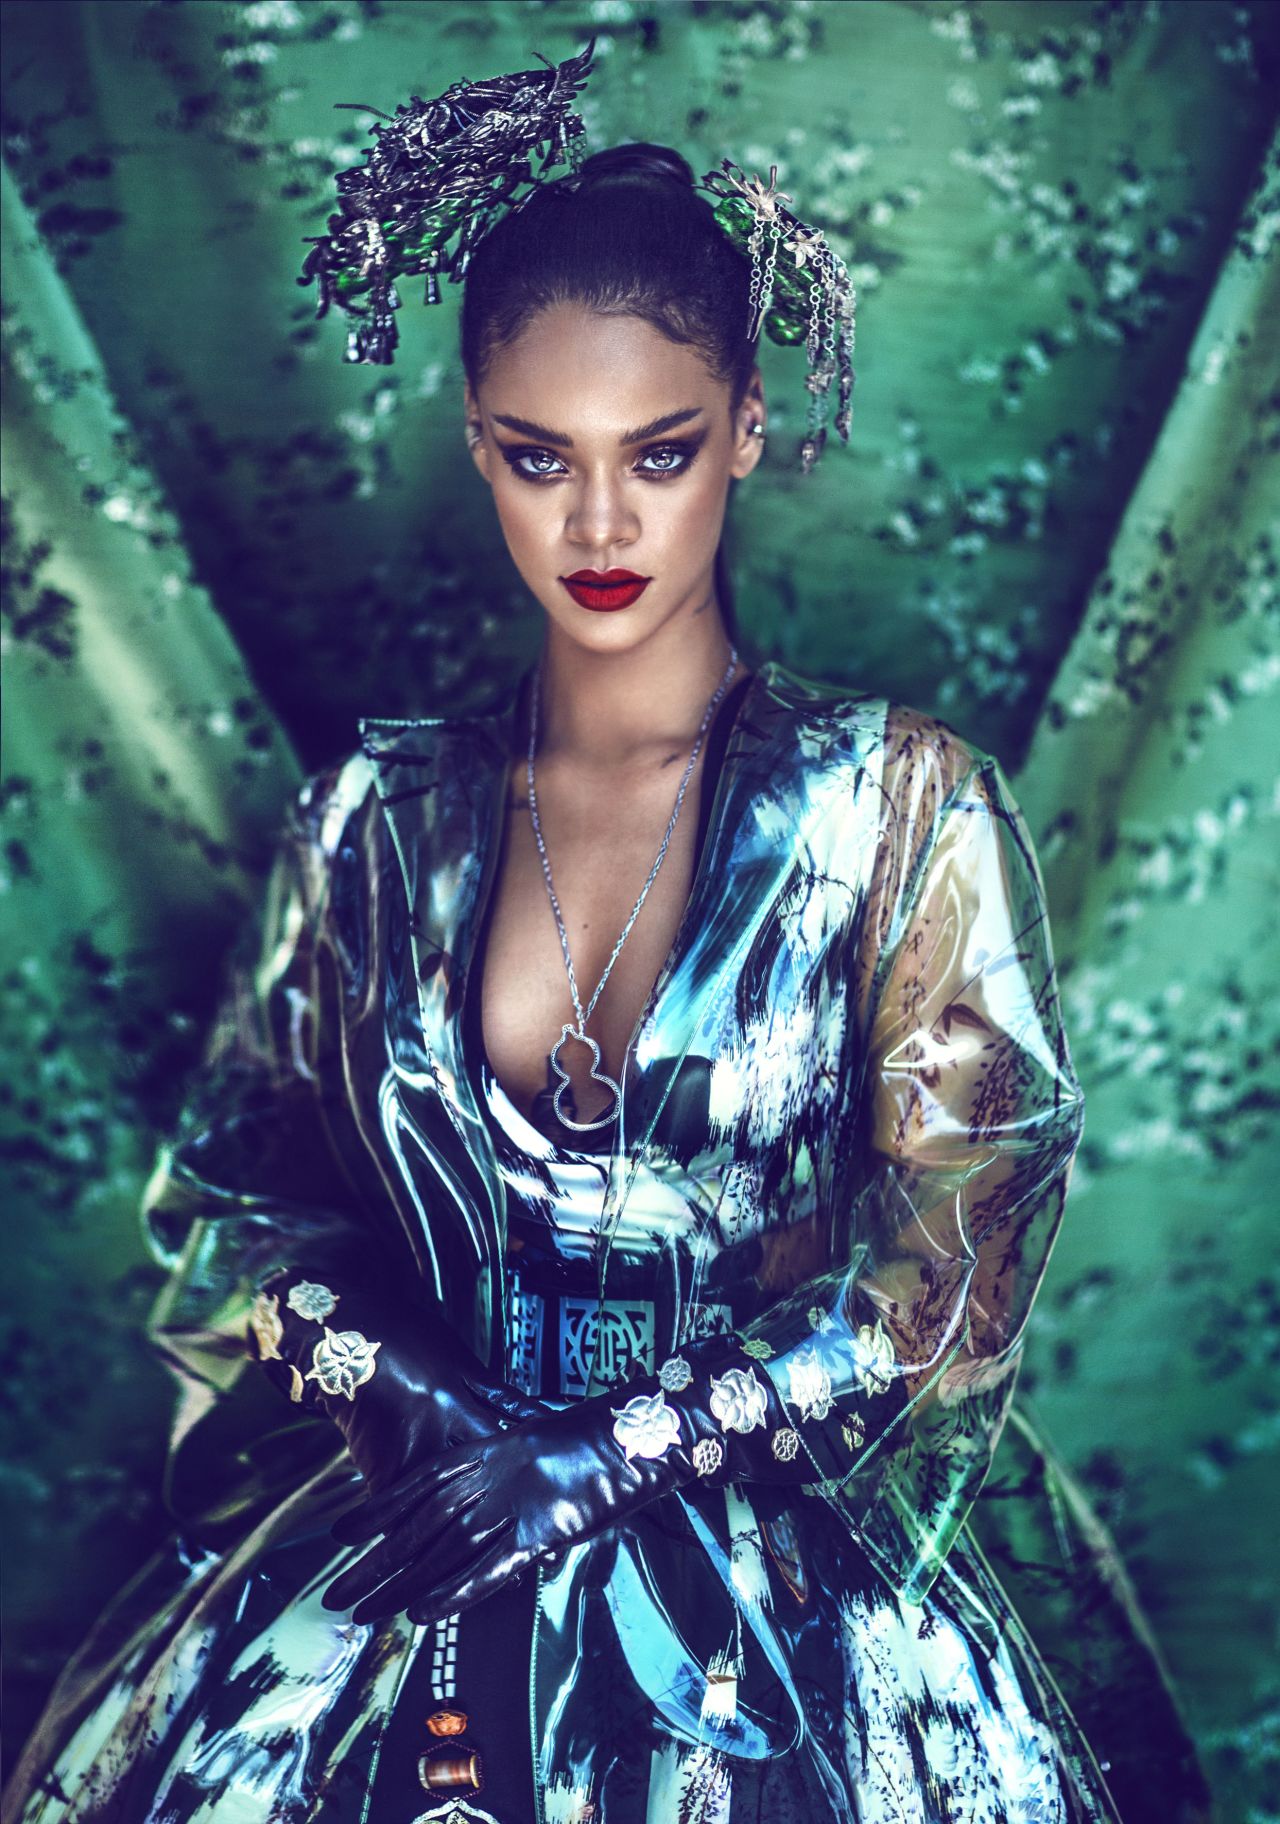 Rihanna posed for Chen Man for a Harper's Bazaar shoot in 2015.